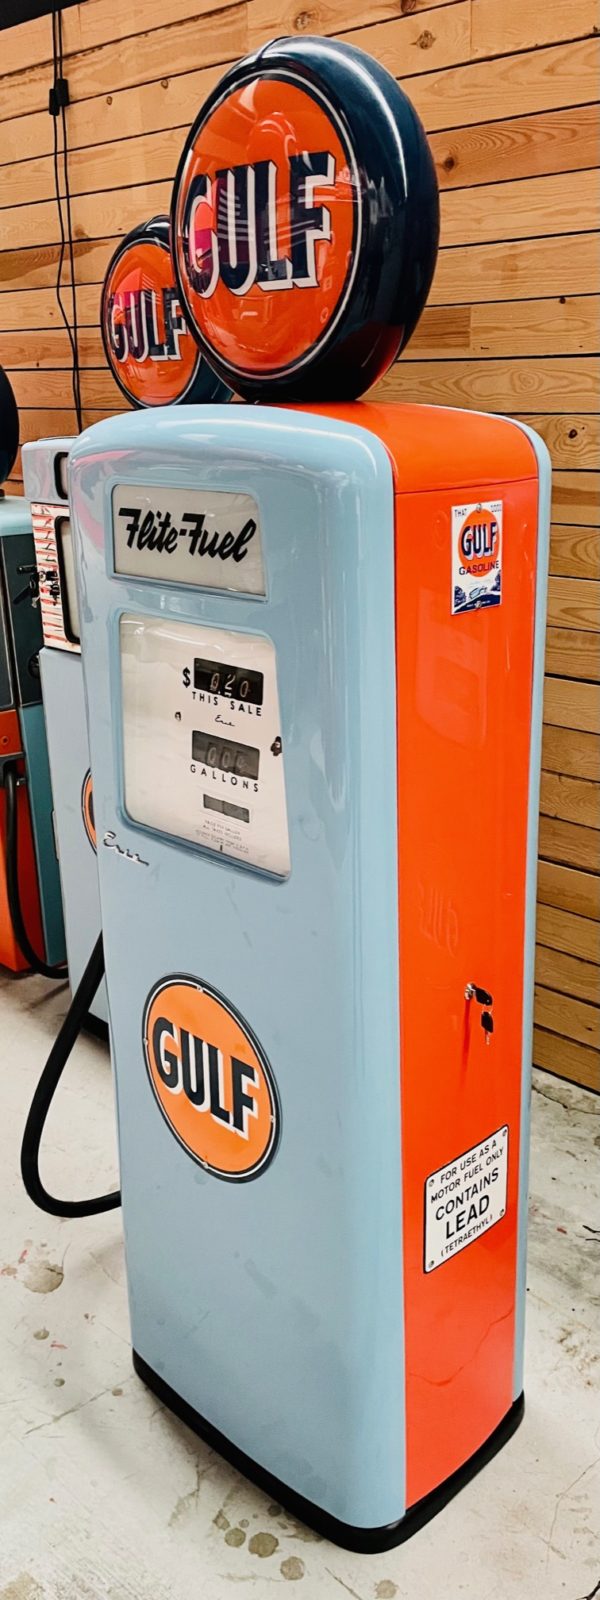 Pompe à essence américaine Gulf de 1957 restaurée